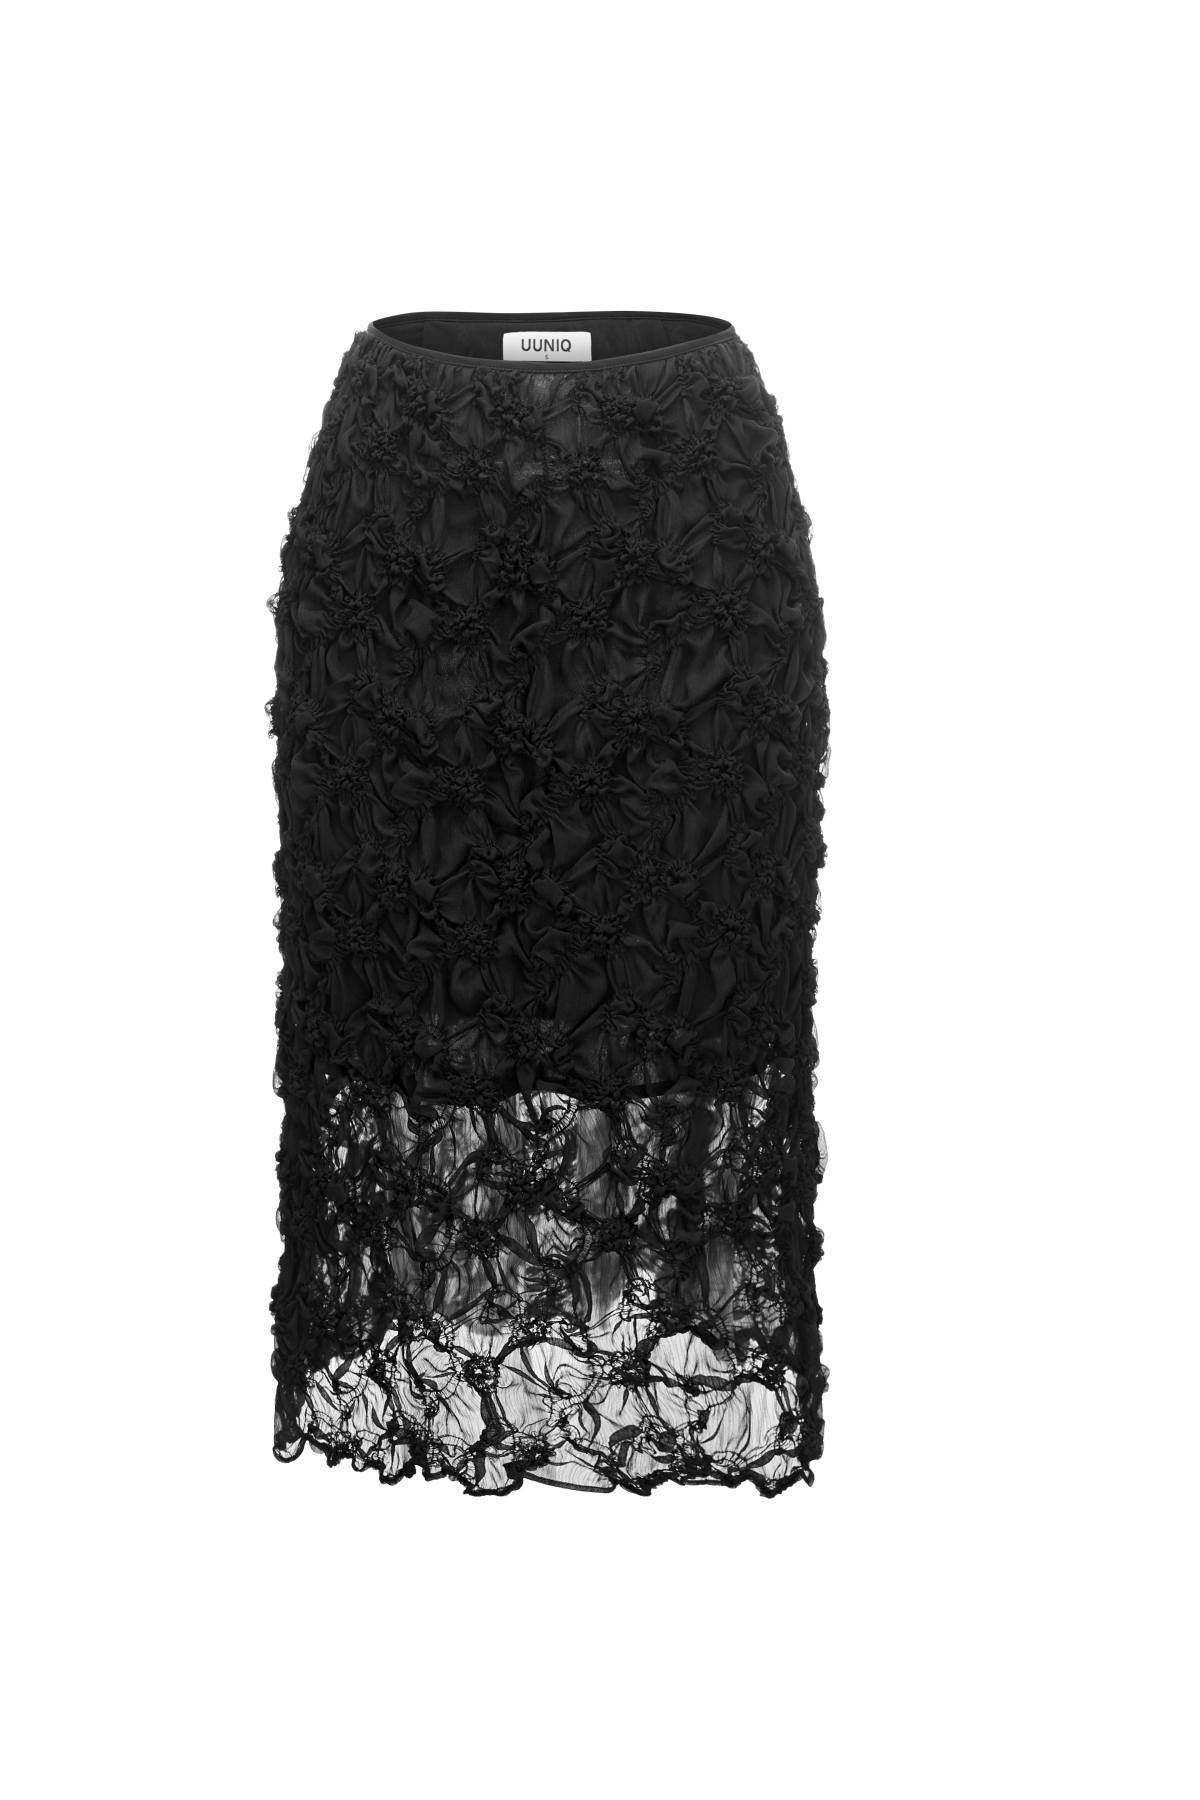 UUNIQ BESTDAY Black Tulle Ruched Midi Skirt